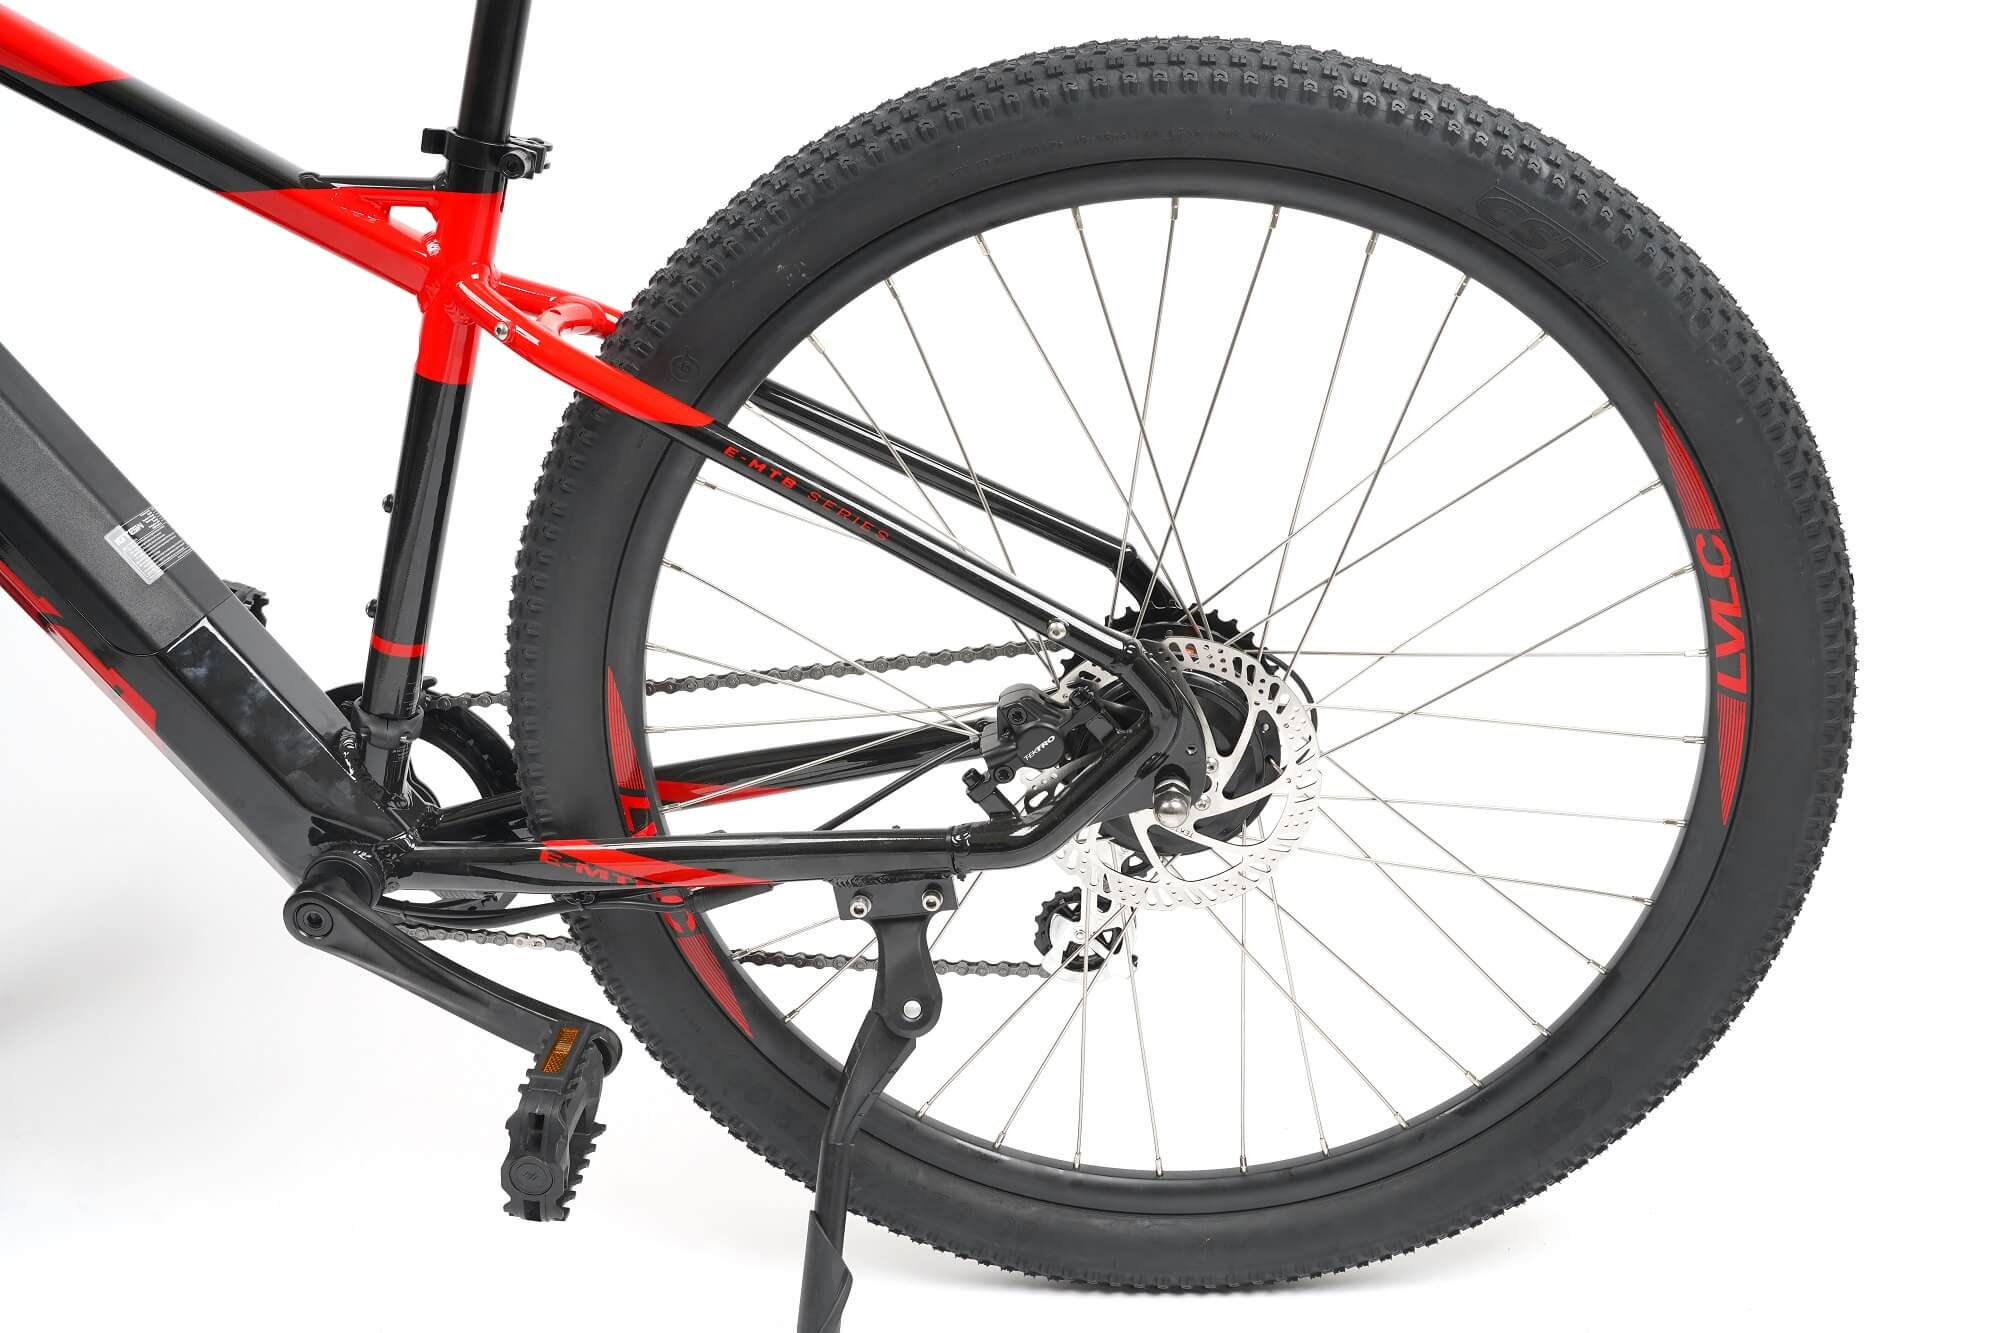 LOVELEC B400347 Mountainbike 29 Rahmenhöhe: (Laufradgröße: 43,18 cm, schwarz/rot) Erwachsene-Rad, Zoll, Wh, 540